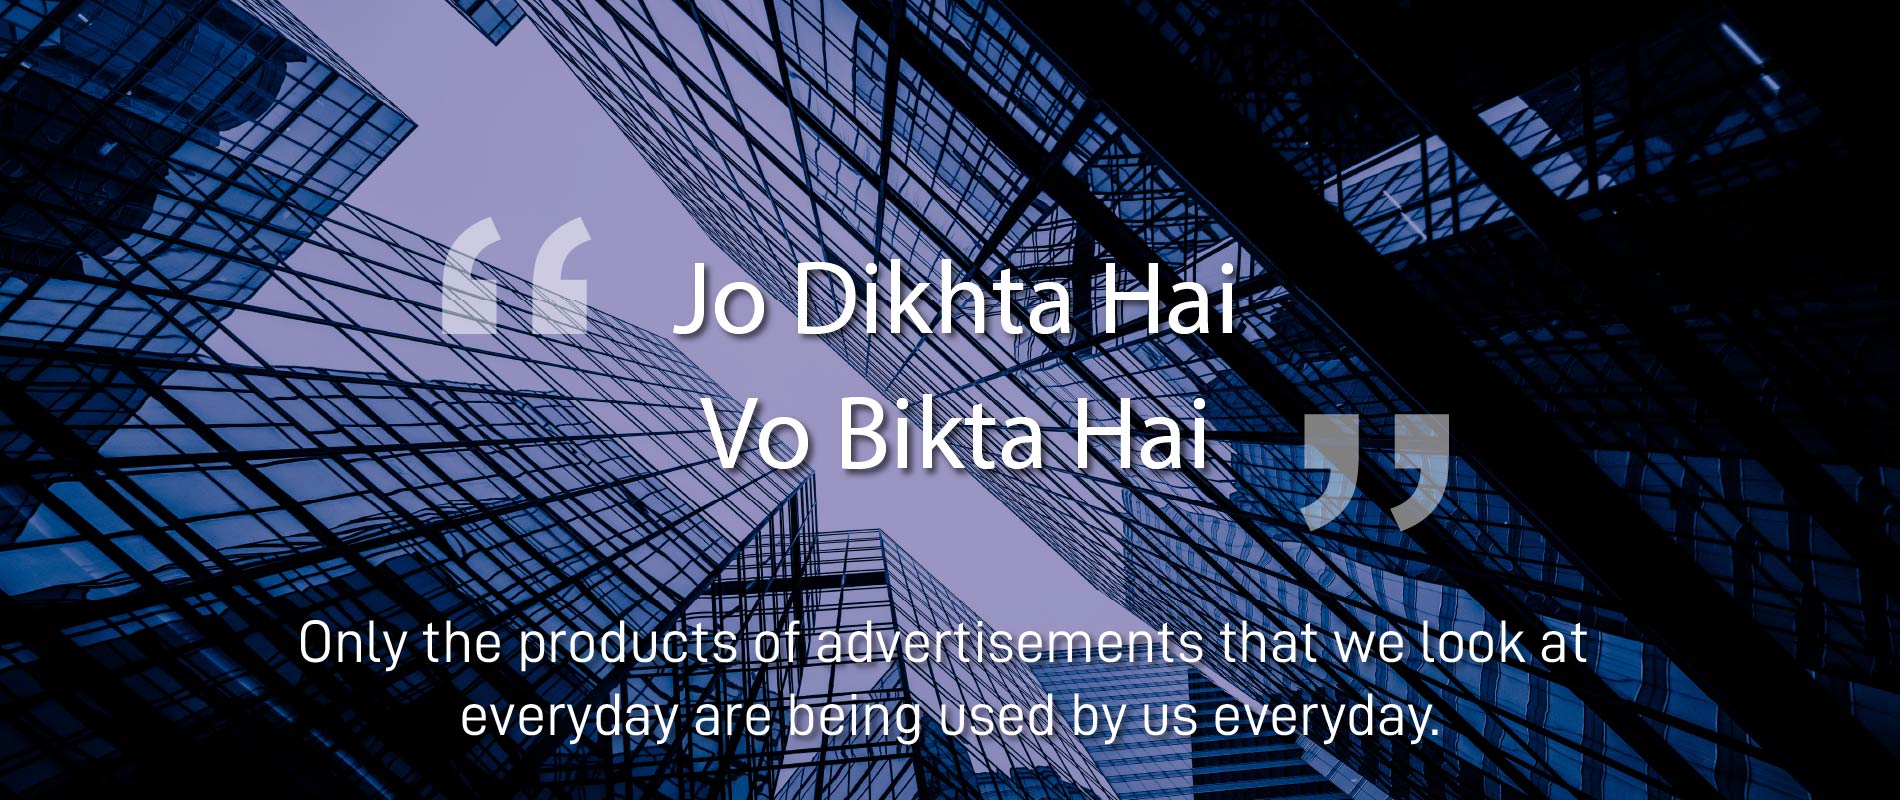 Jo Dikhta Hai vo Bikta Hae - Social Media Marketing Agency Vadodara, India | Lead Generation Agency | Social Media Marketing company Vadodara India | digital promotion agency